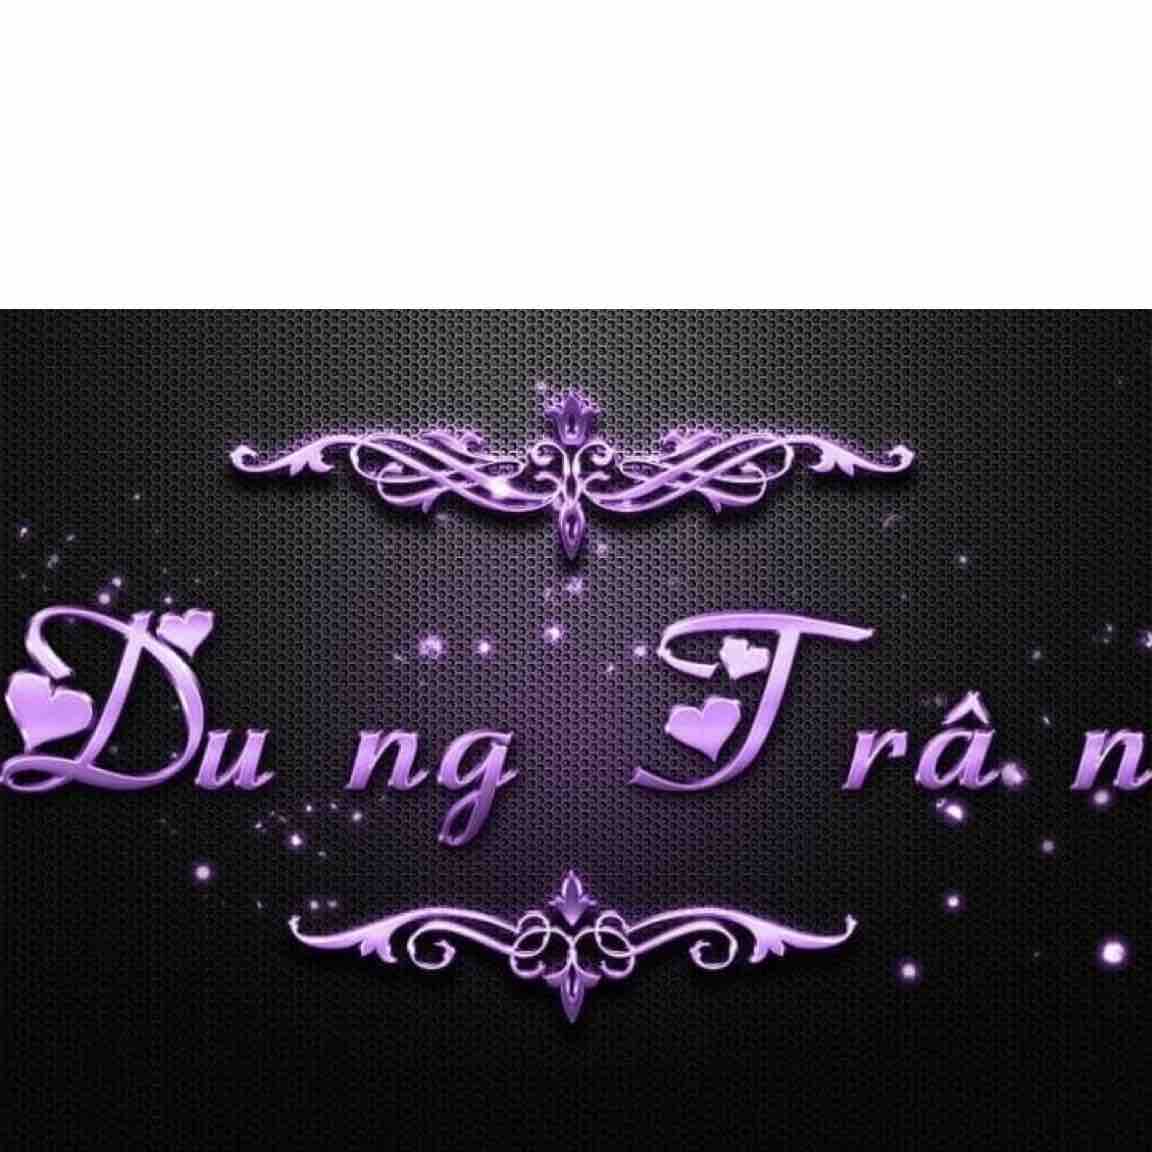 Dung Tran